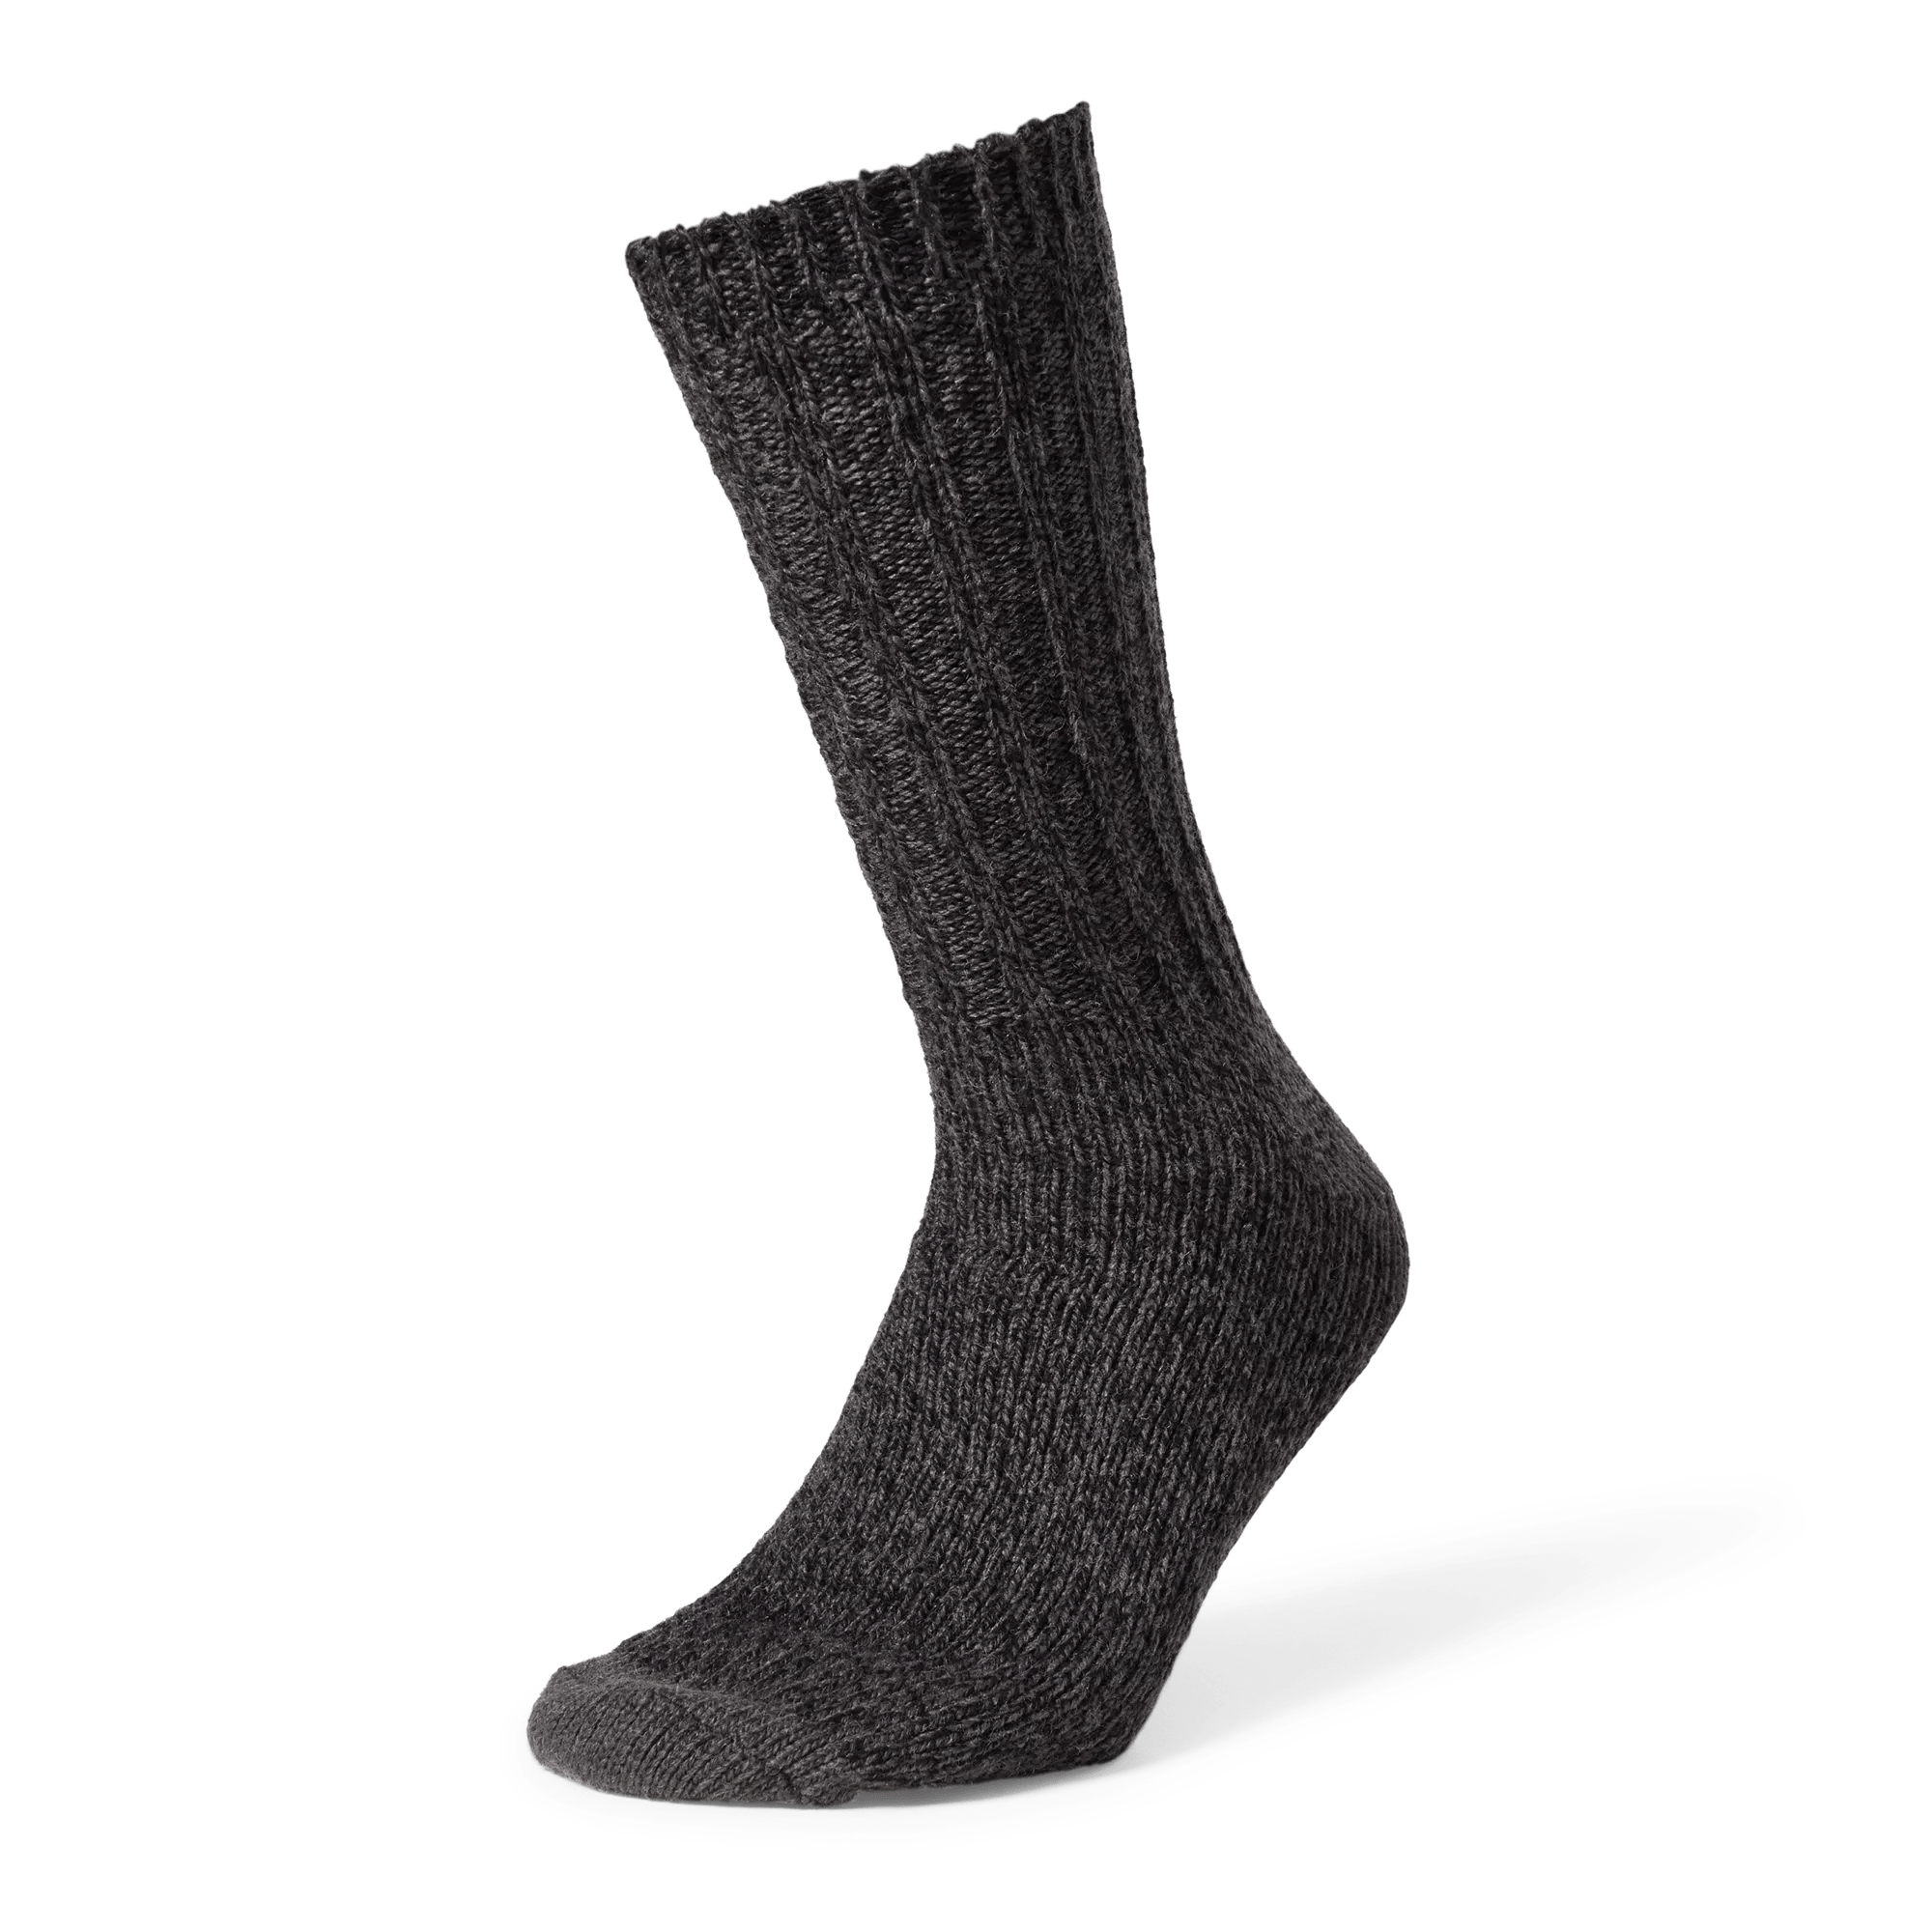 Ragg Boot Socks